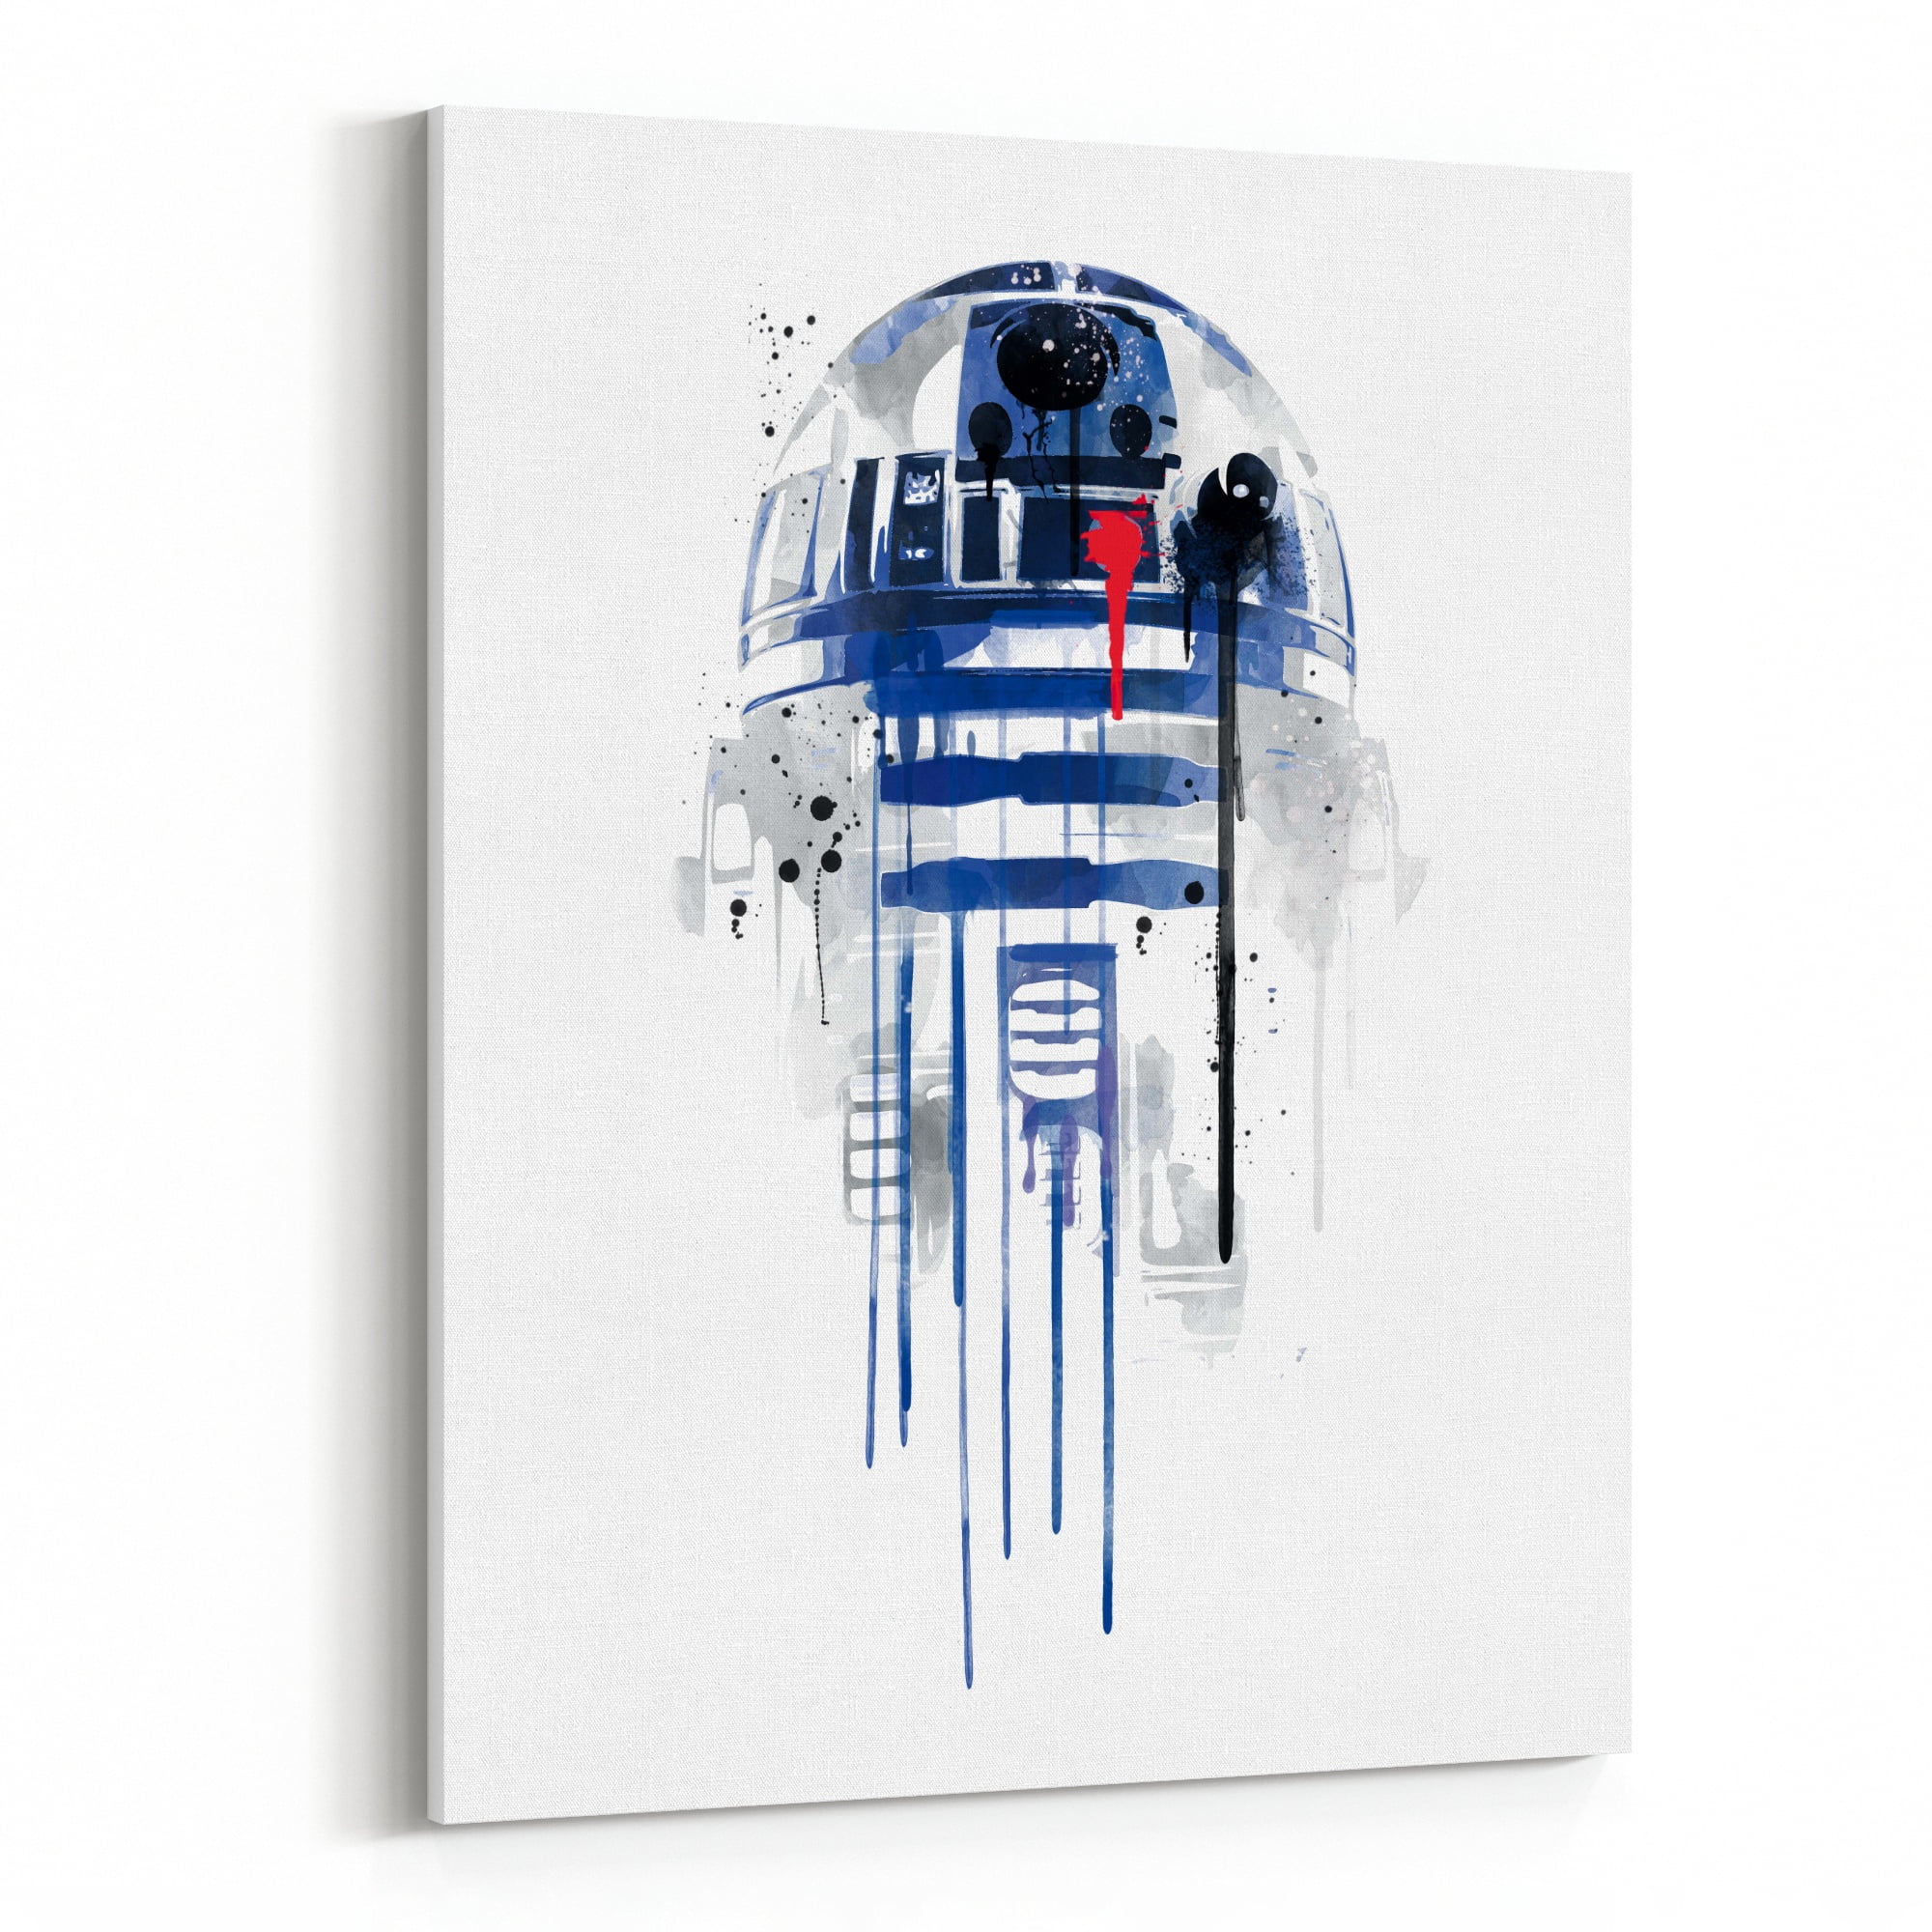 Droids Star Wars Illustration  Painting Poster Print 9x12